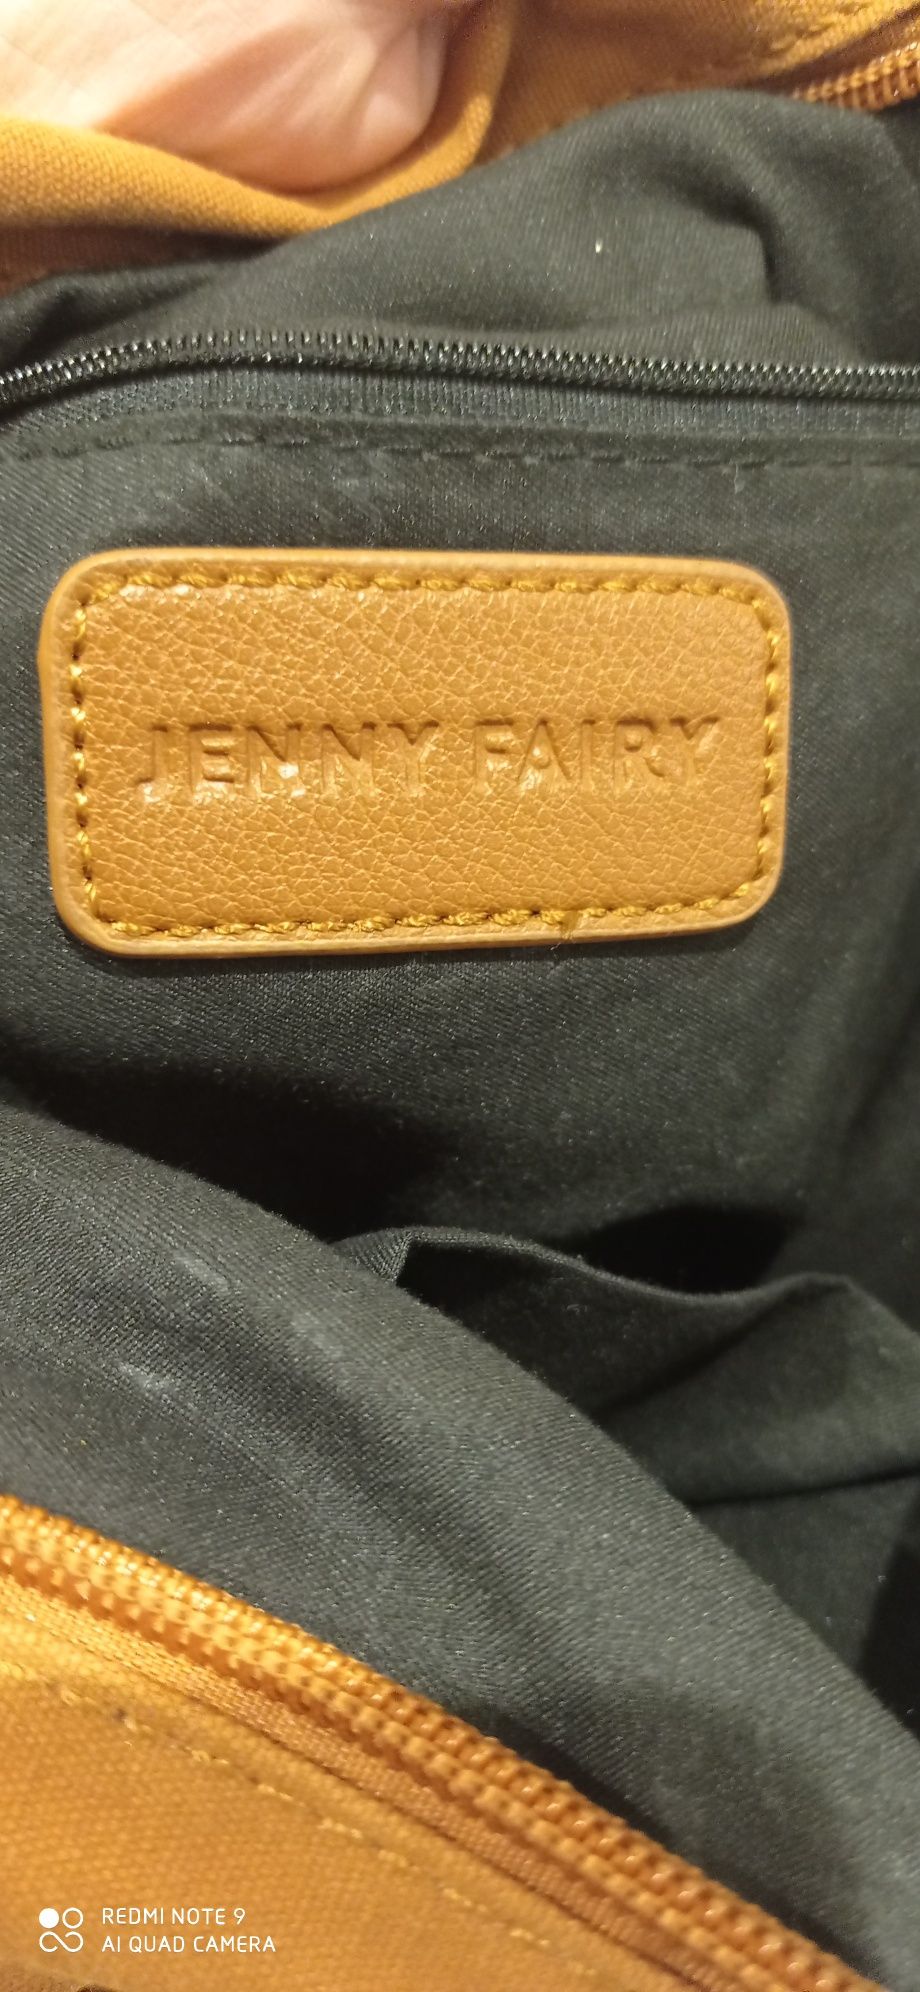 Kamelowa torebka typu shopper Jenny Fairy